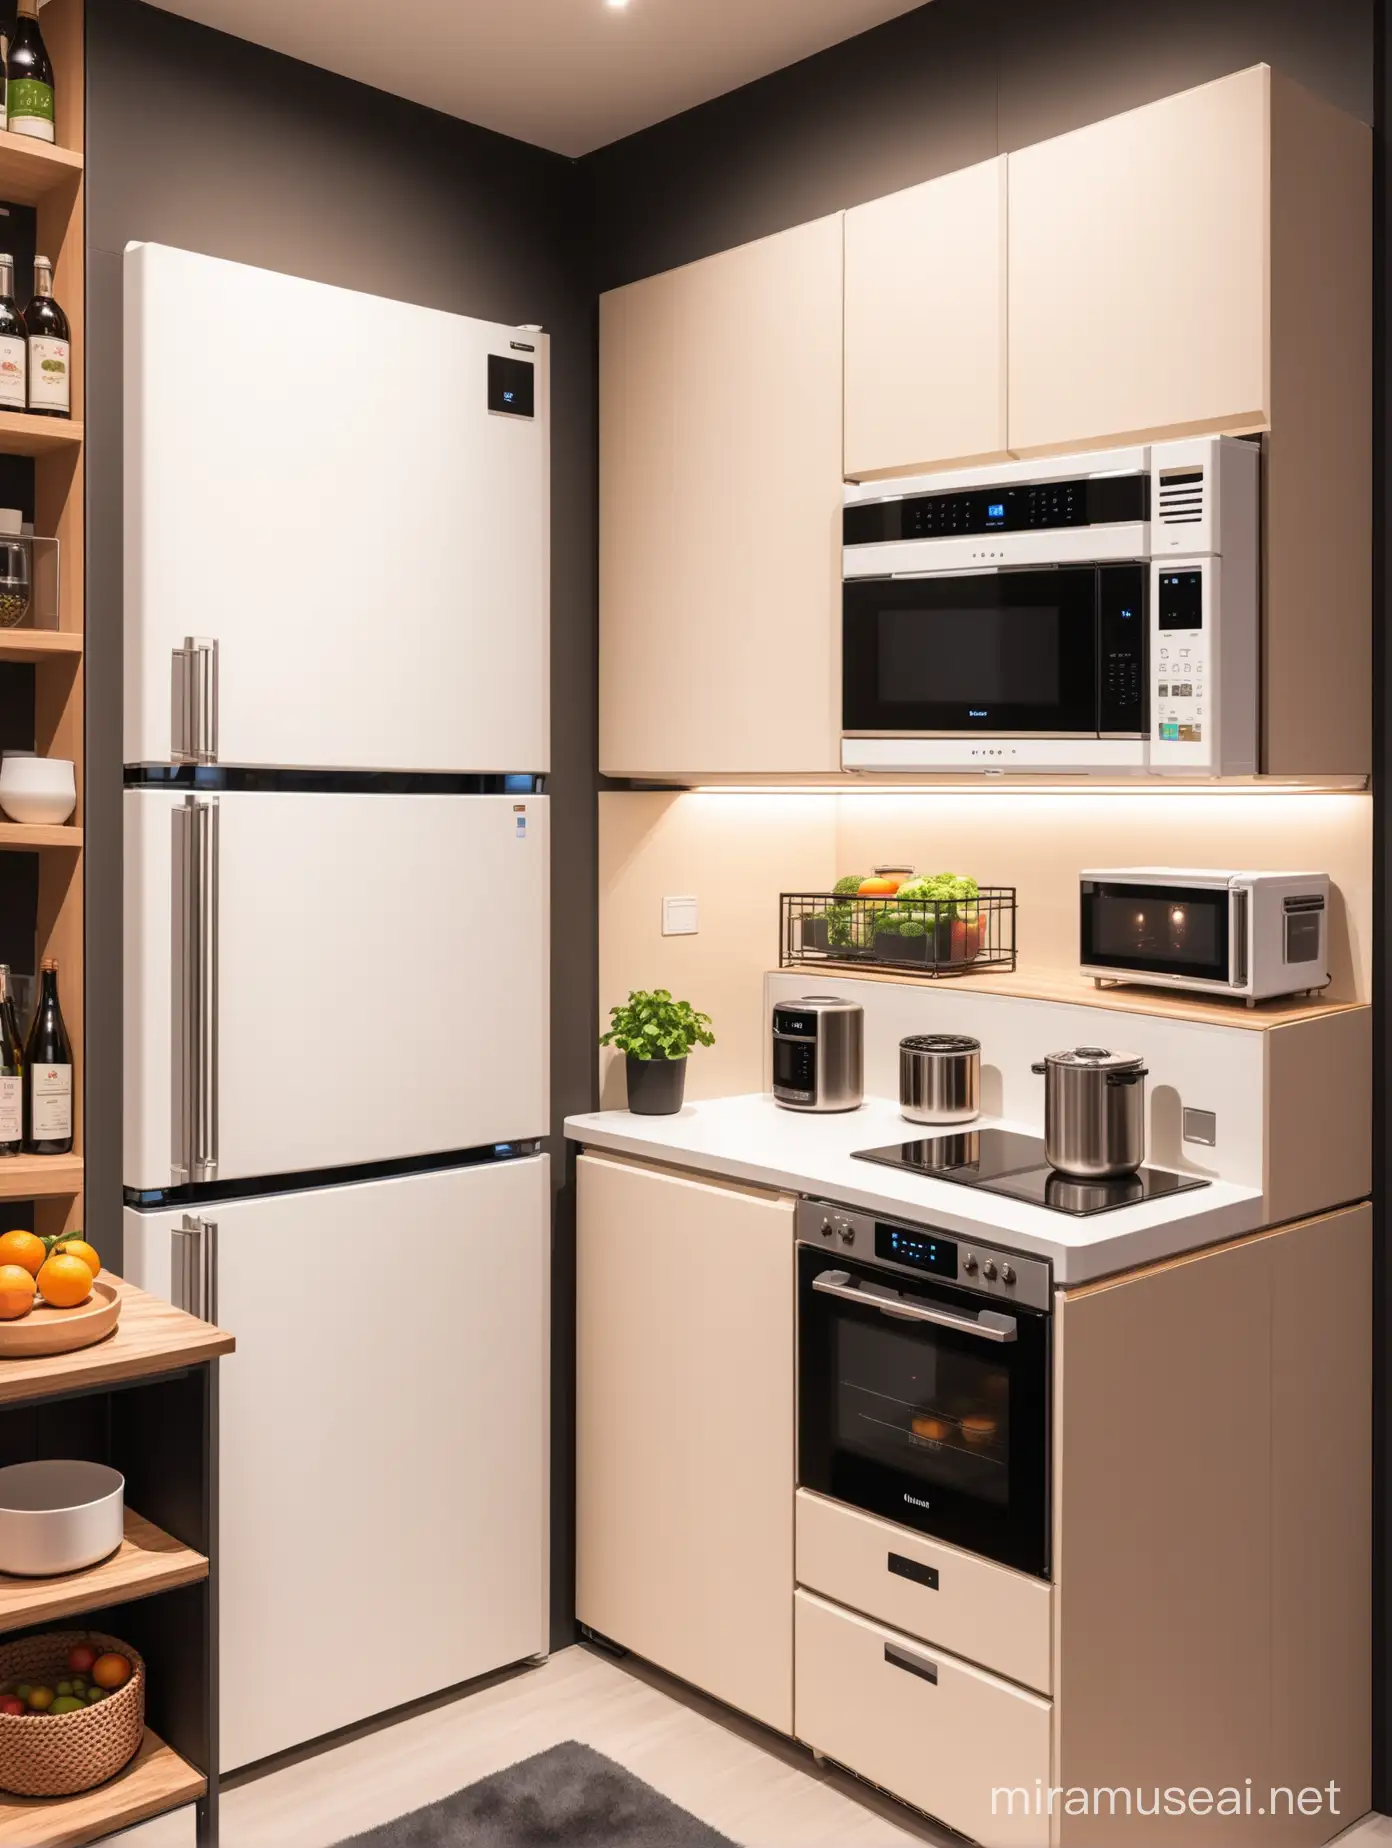 Cozy technological kitchen, fridge, microwave, cute